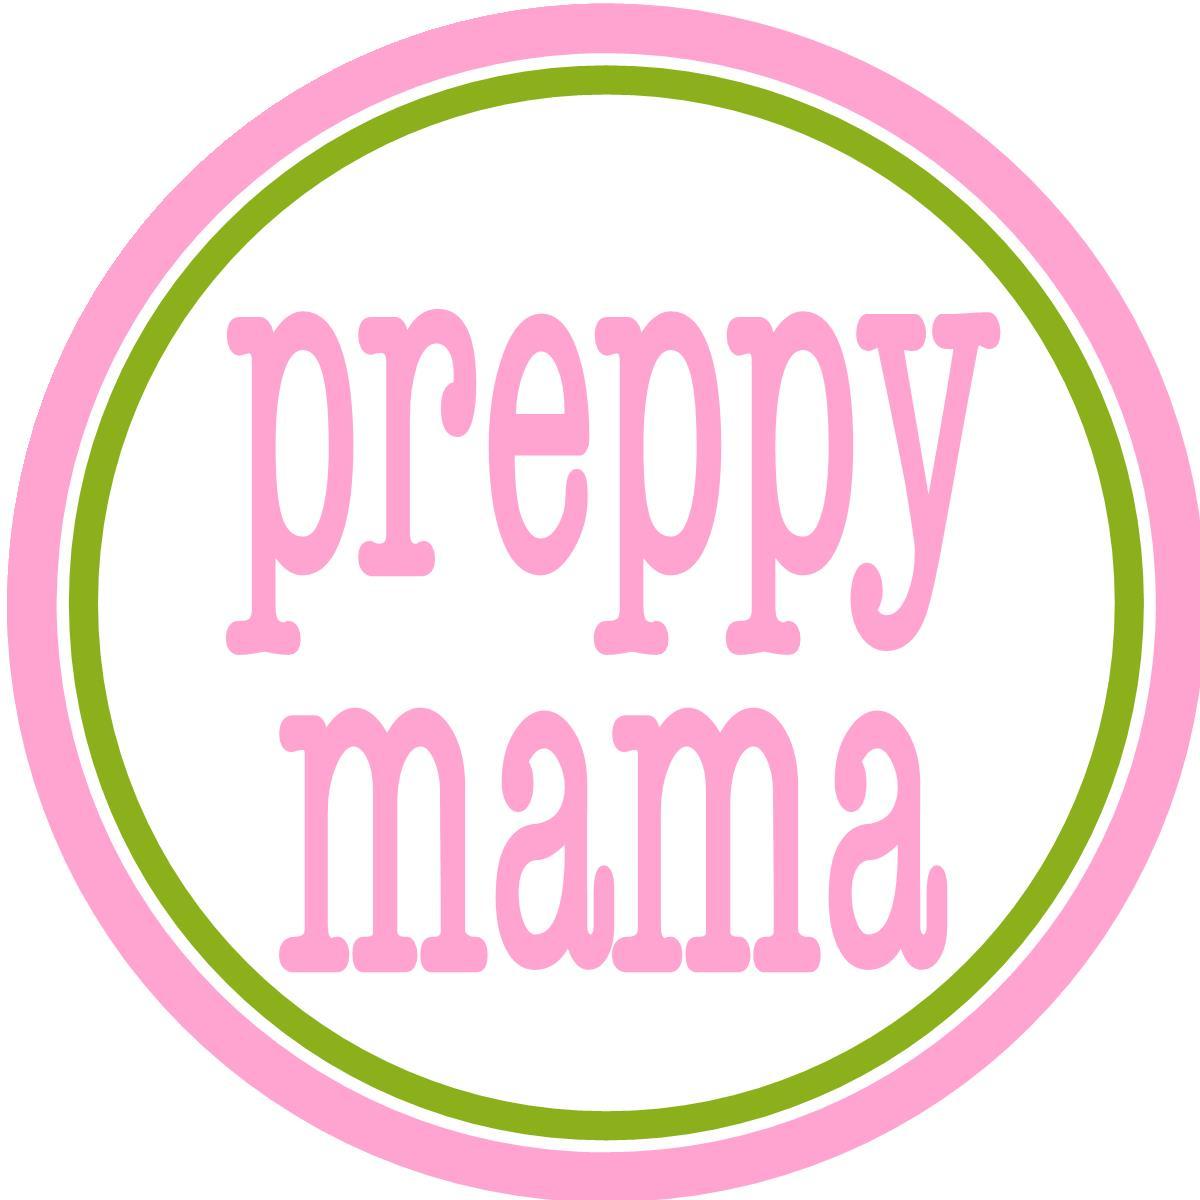 Heart Sayings Valentine Styrofoam Party Cups – Preppy Mama